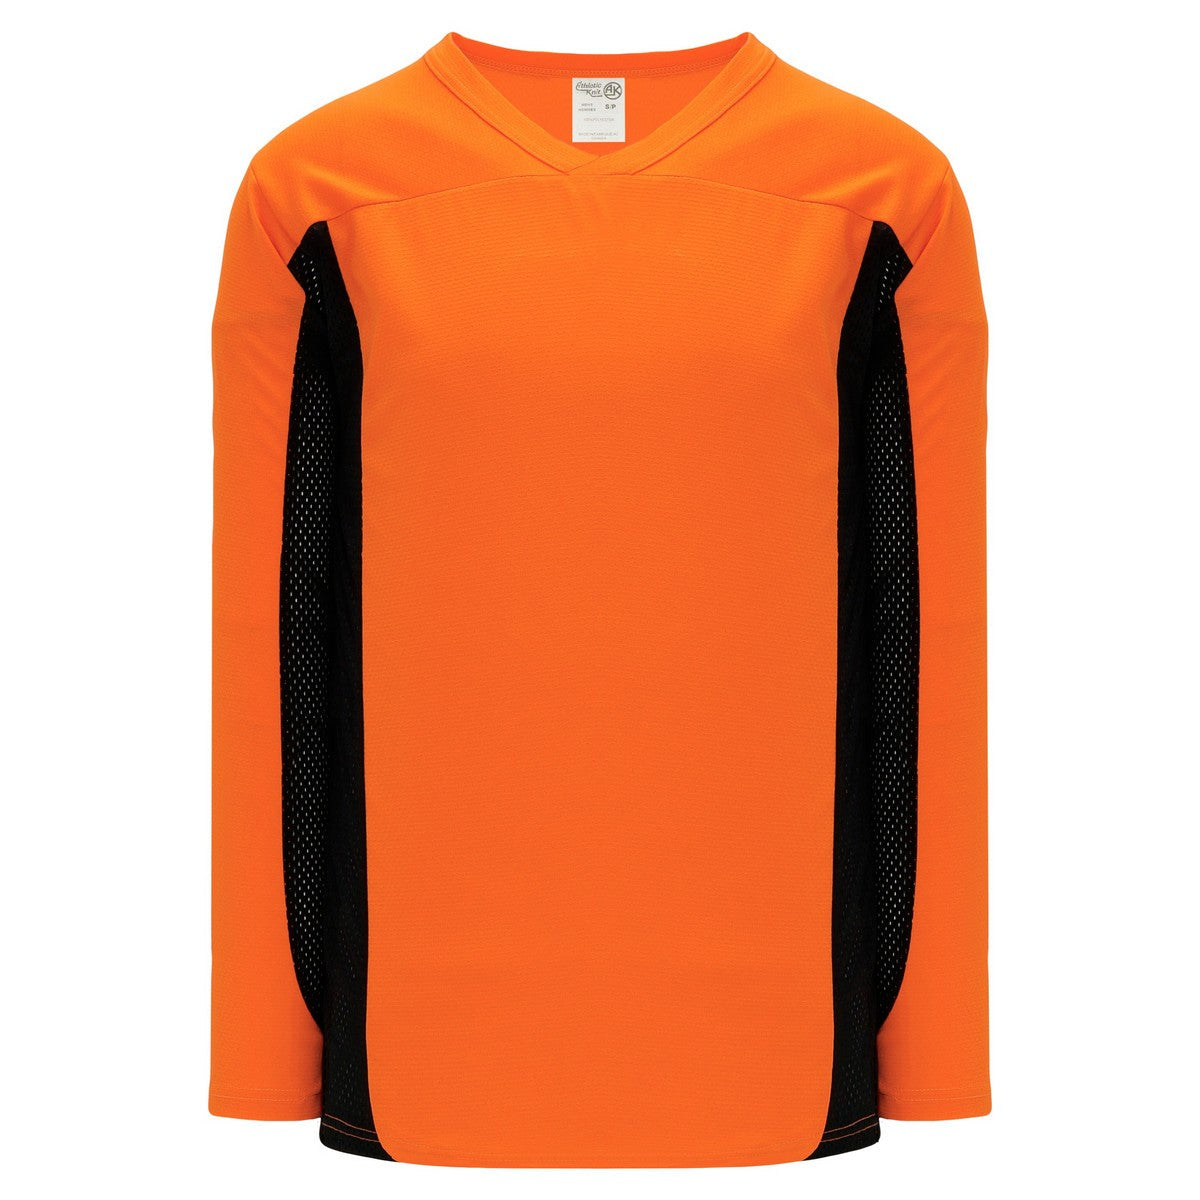 League Series H7100 Jersey in Orange-Black